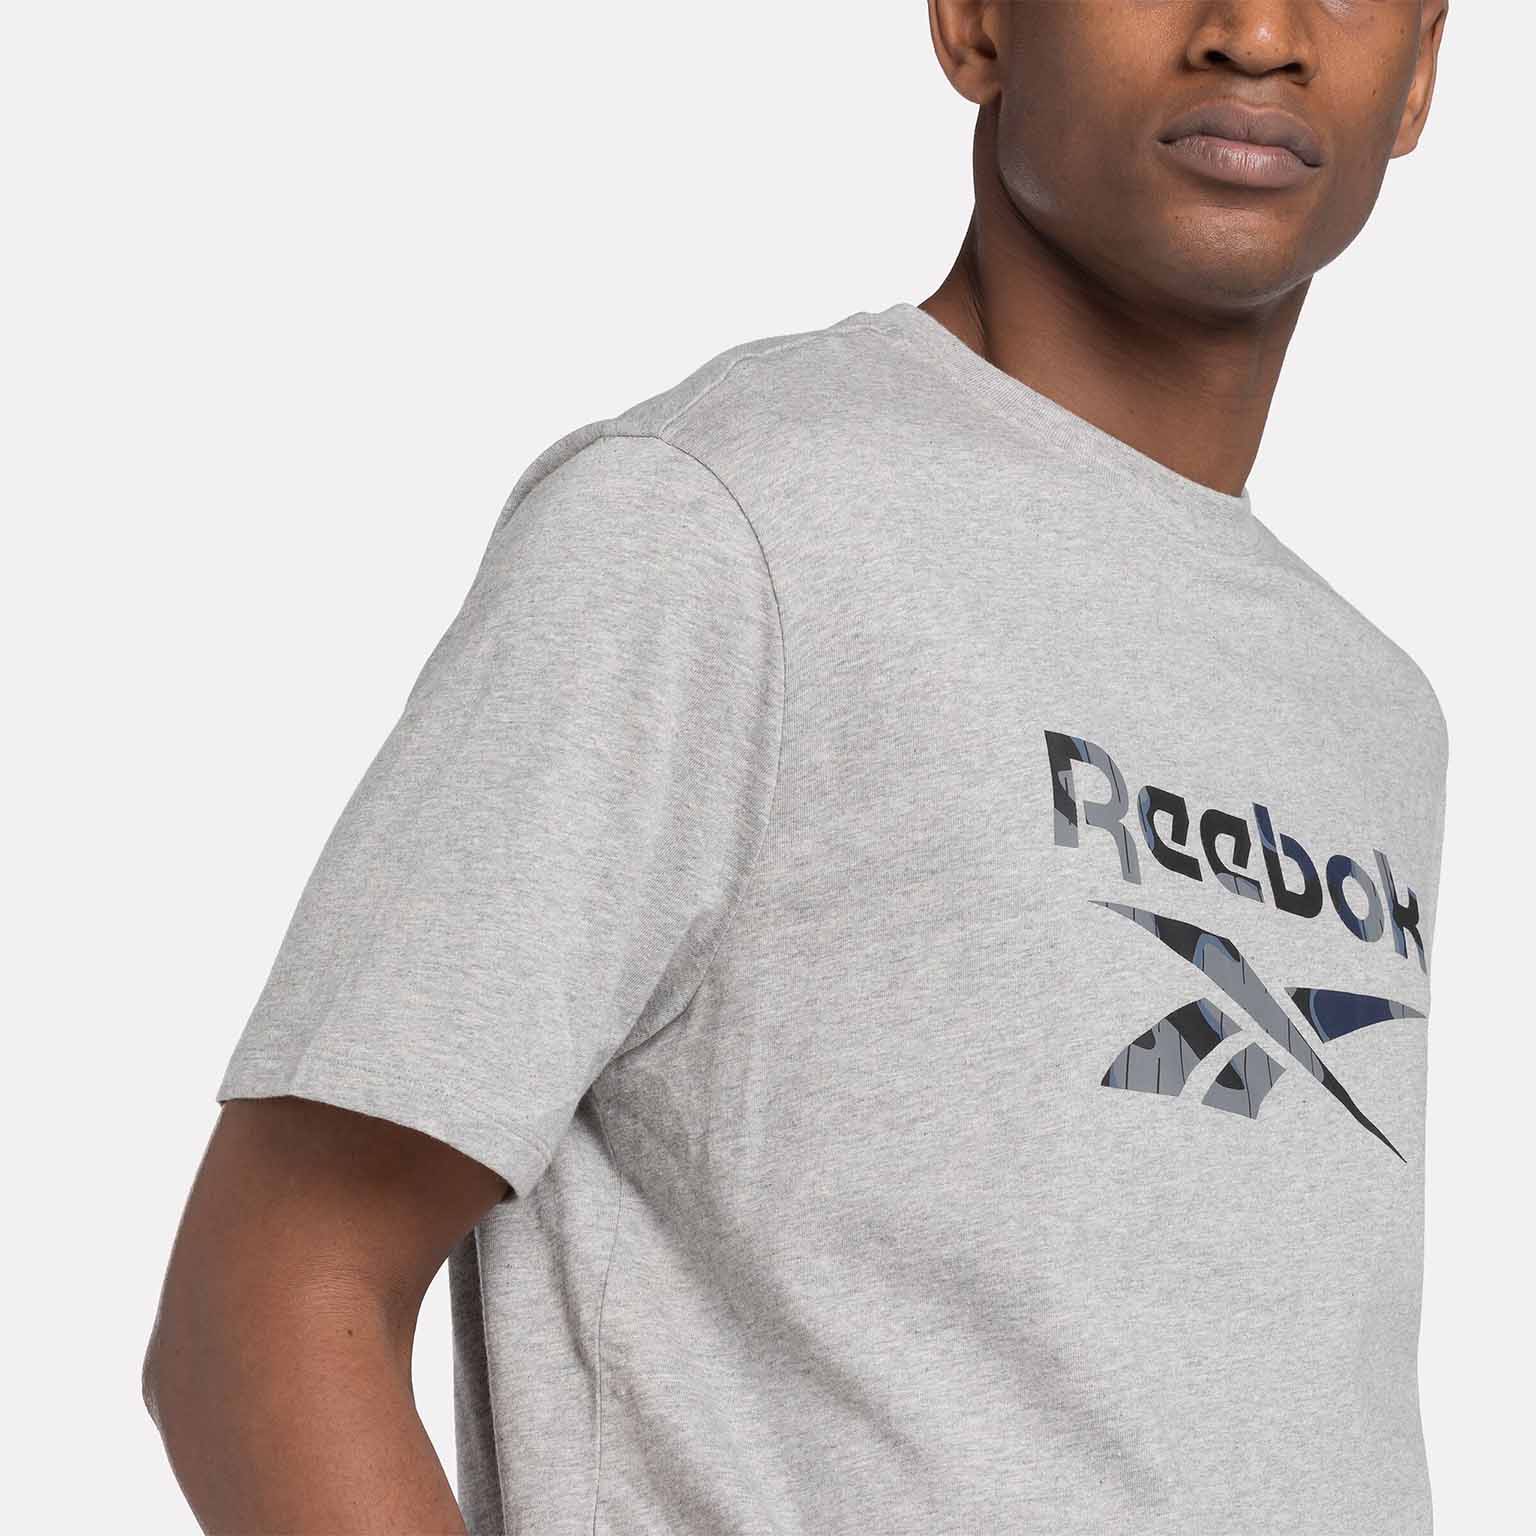 Reebok Identity Motion bedrucktes T-Shirt